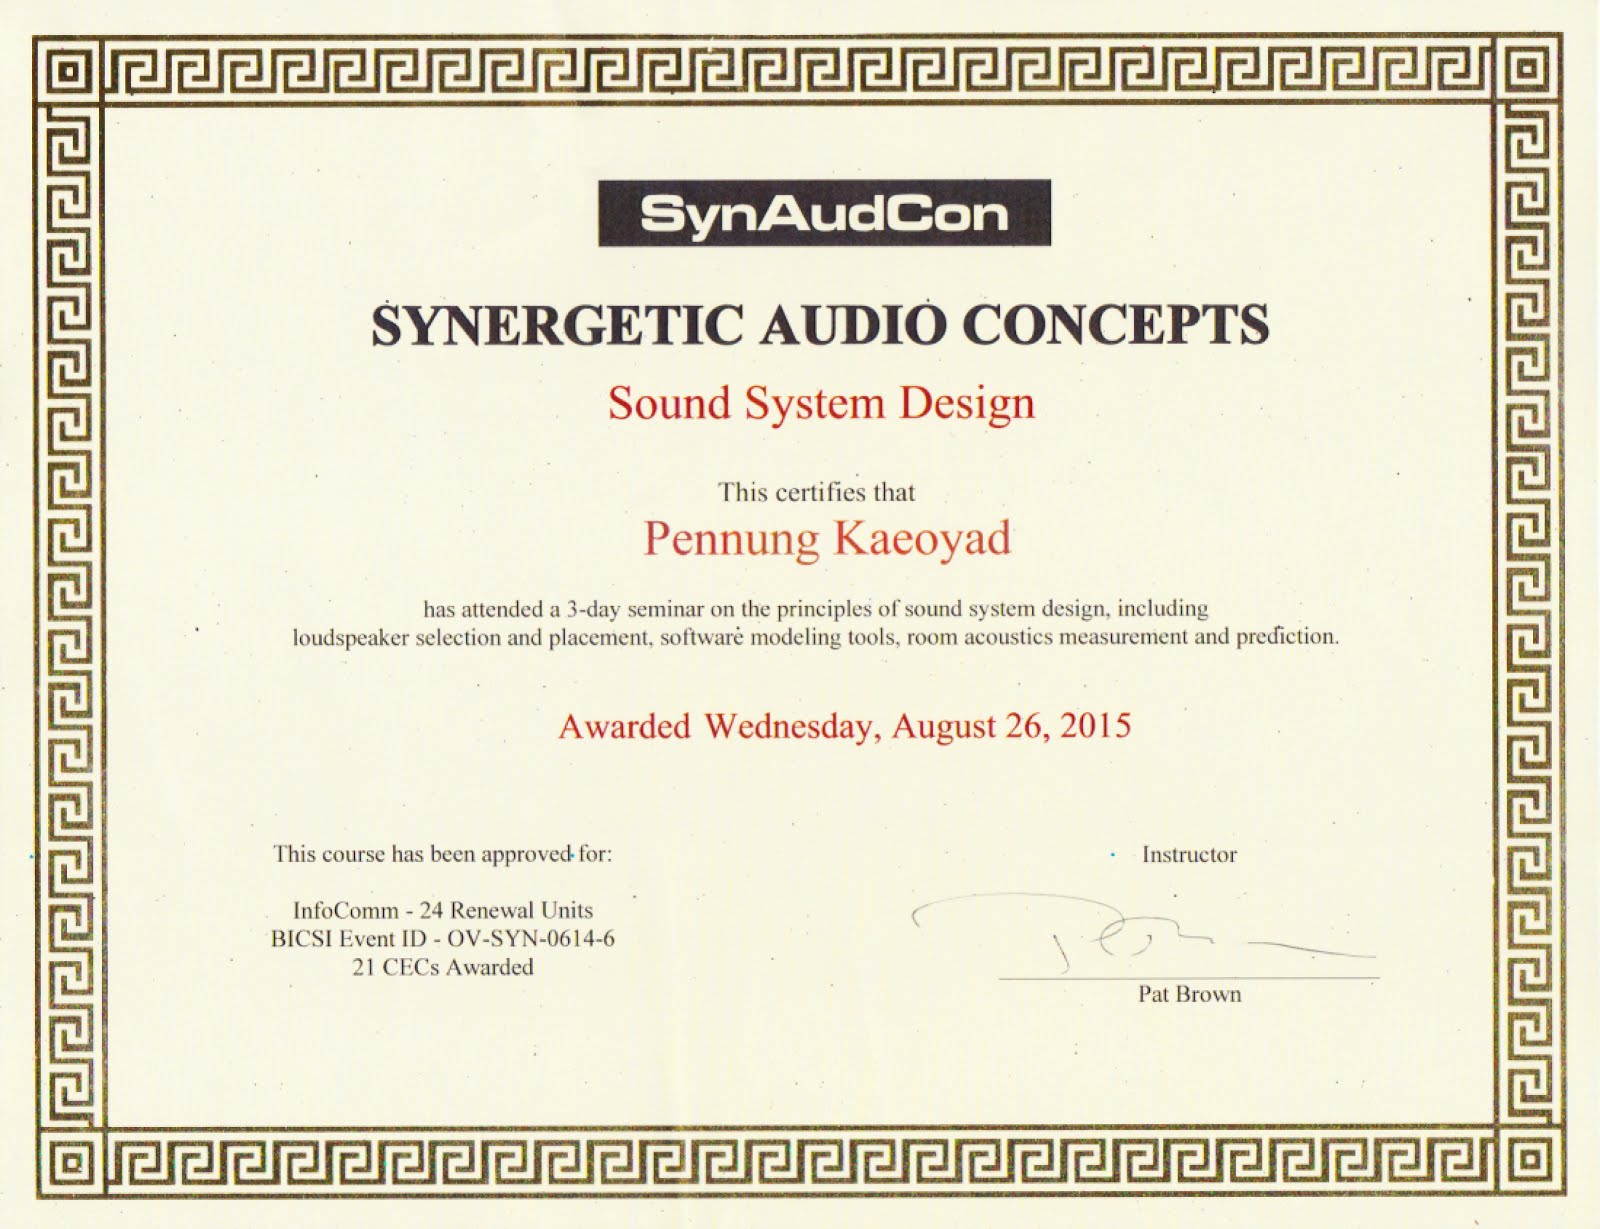 Certifies Sound System Design